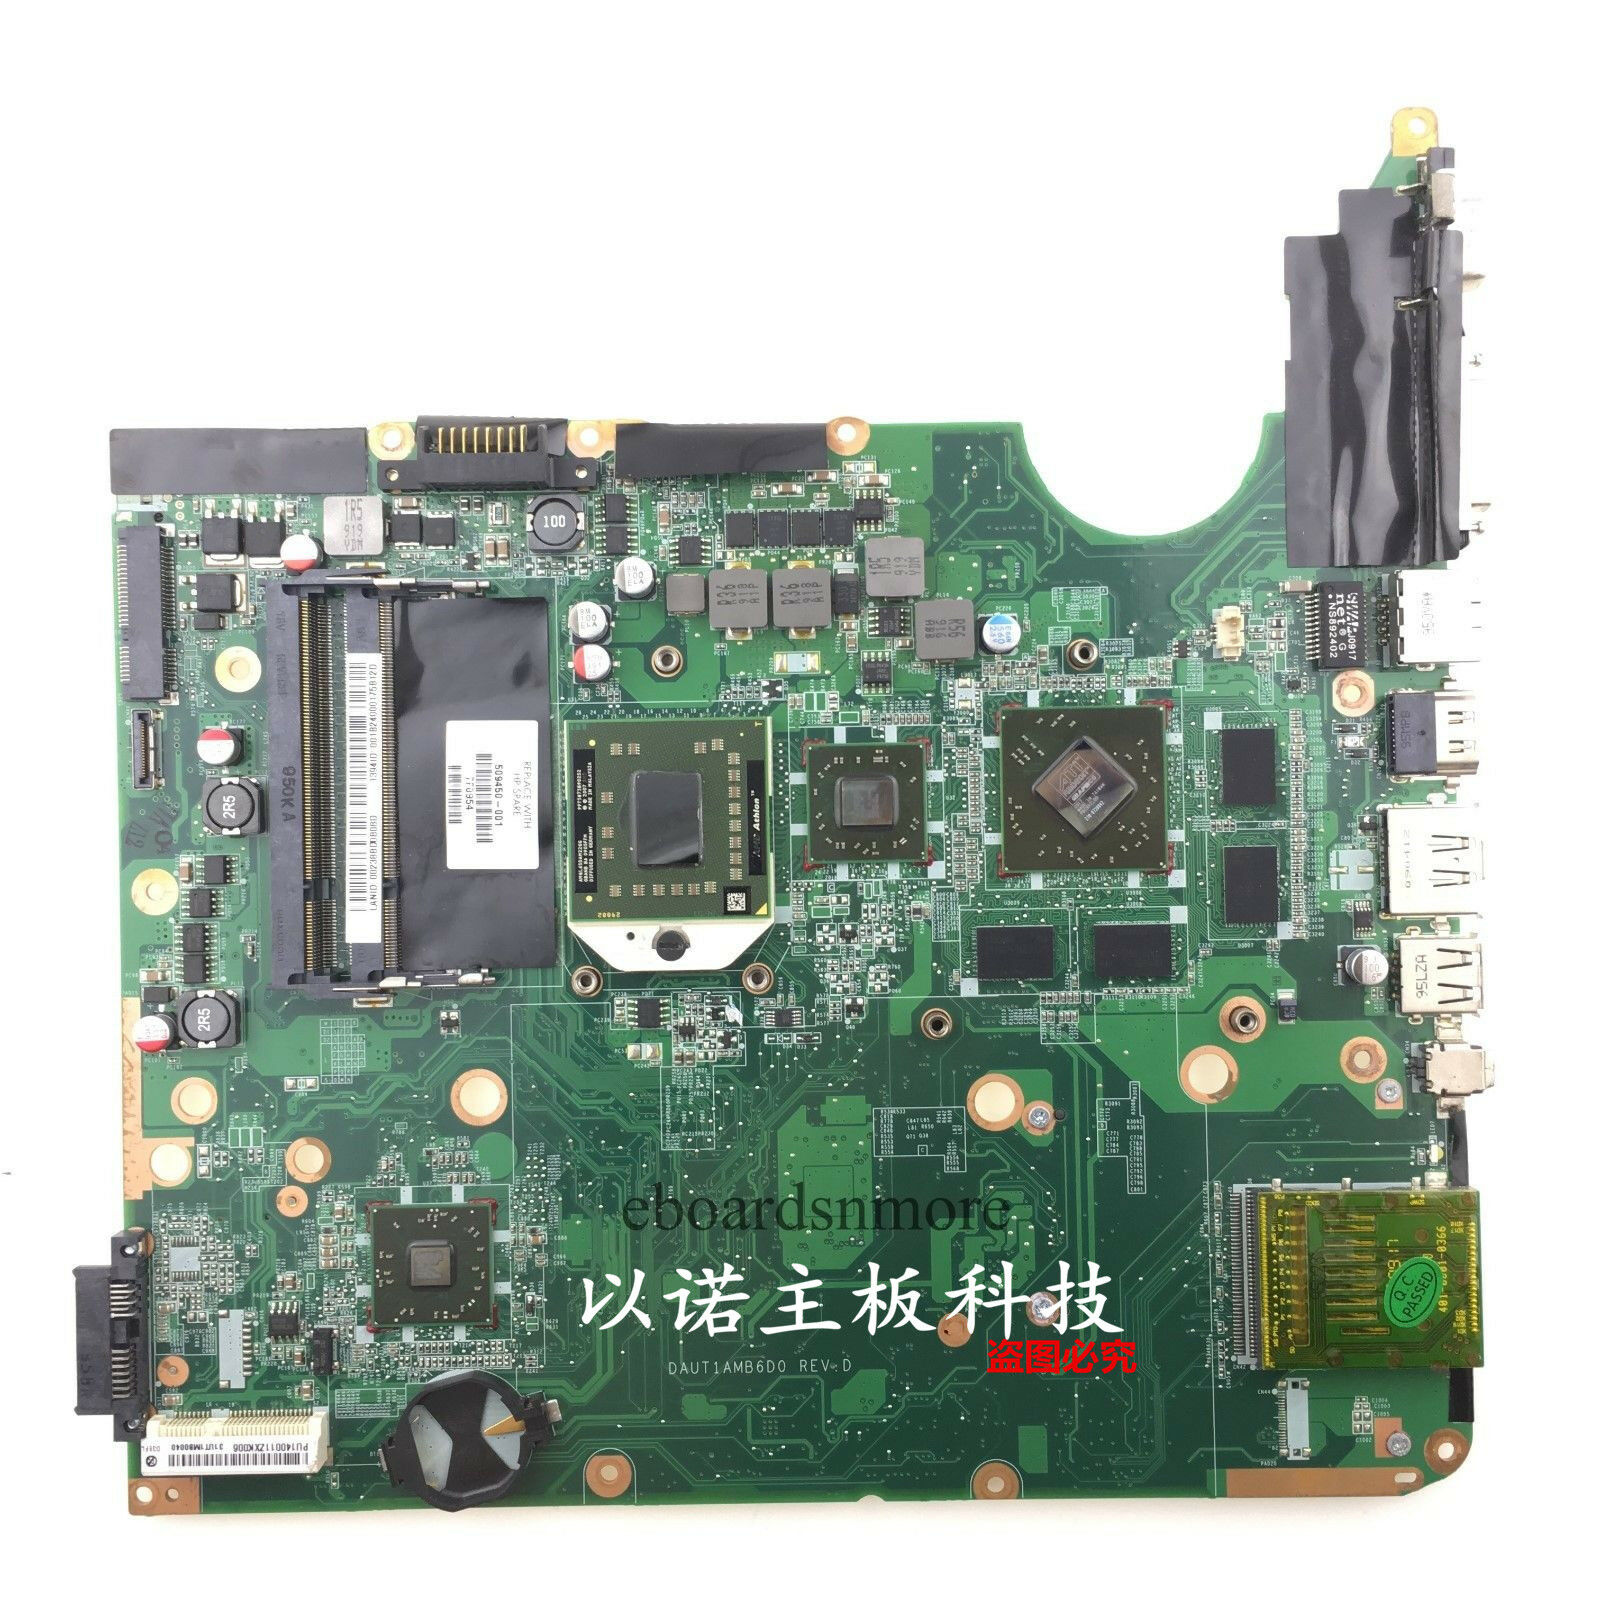 509450-001 for HP DV6 DV6-1200 Series AMD motherboard,ATI Radeon HD4650 Grade A Compatible CPU Brand: AMD Me